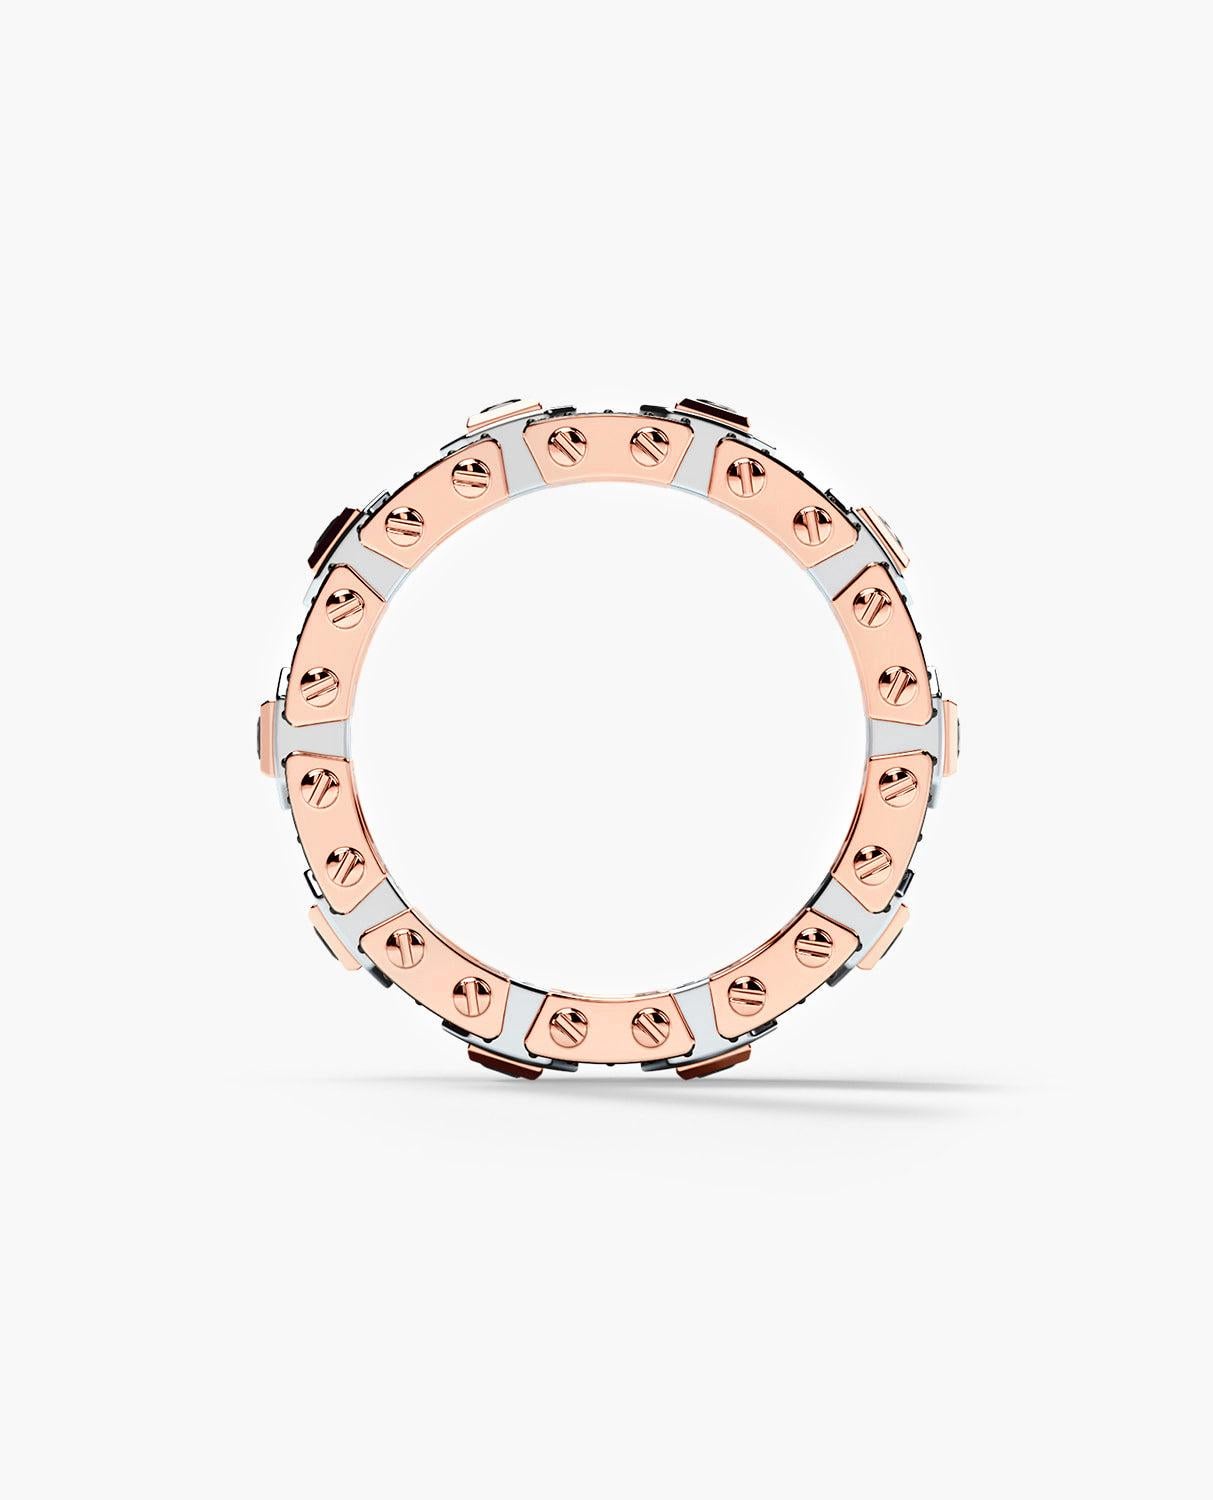 Contemporary LA PAZ 14k Rose & White Gold Ring with 1.20ct Black Diamonds